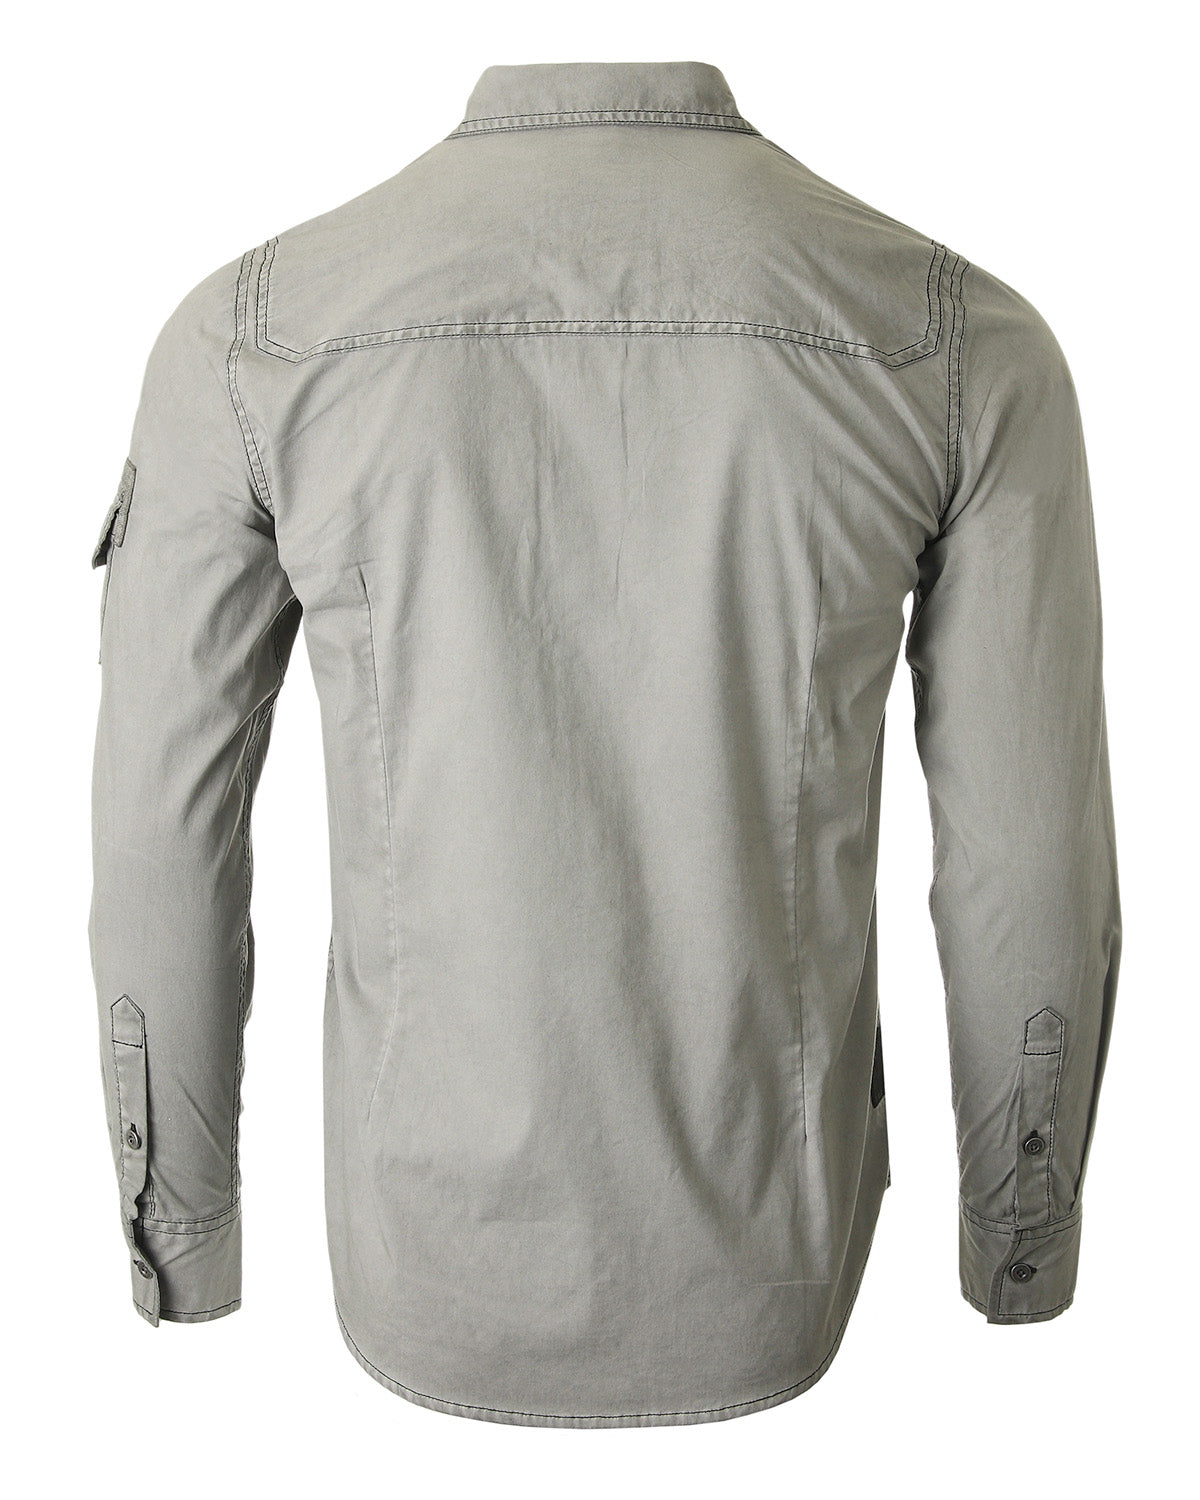 Men's Stretch Flex Color Washed Vintage Fashion Button Shirt - Team Spirit Store USA 